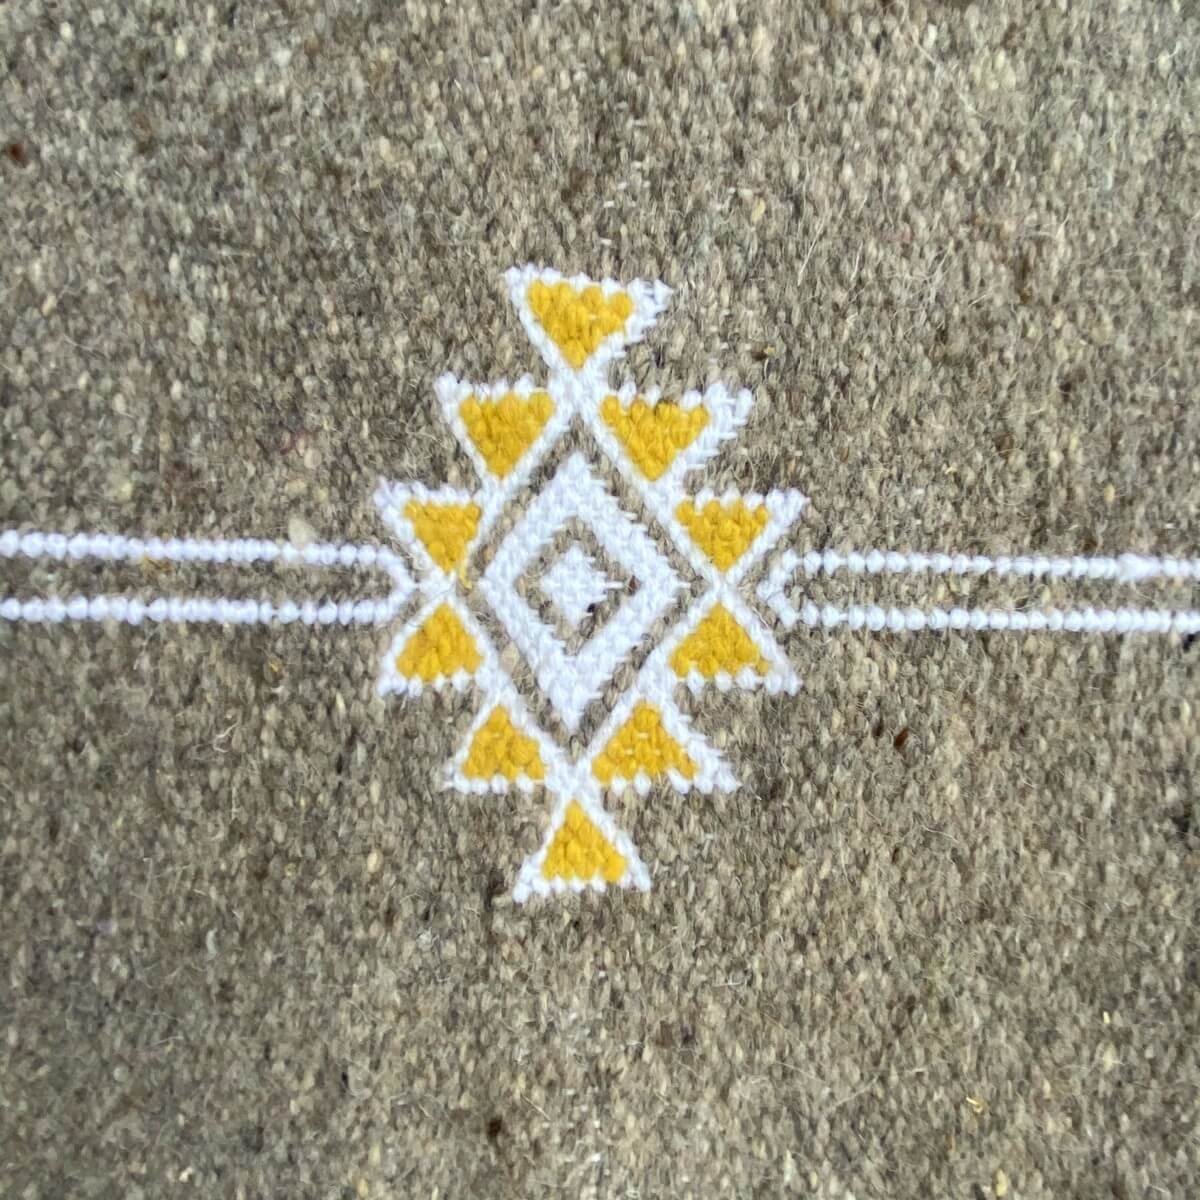 Tapis berbère Tapis Kilim Israsen 114x202 Gris/Jaune (Tissé main, Laine, Tunisie) Tapis kilim tunisien style tapis marocain. Tap